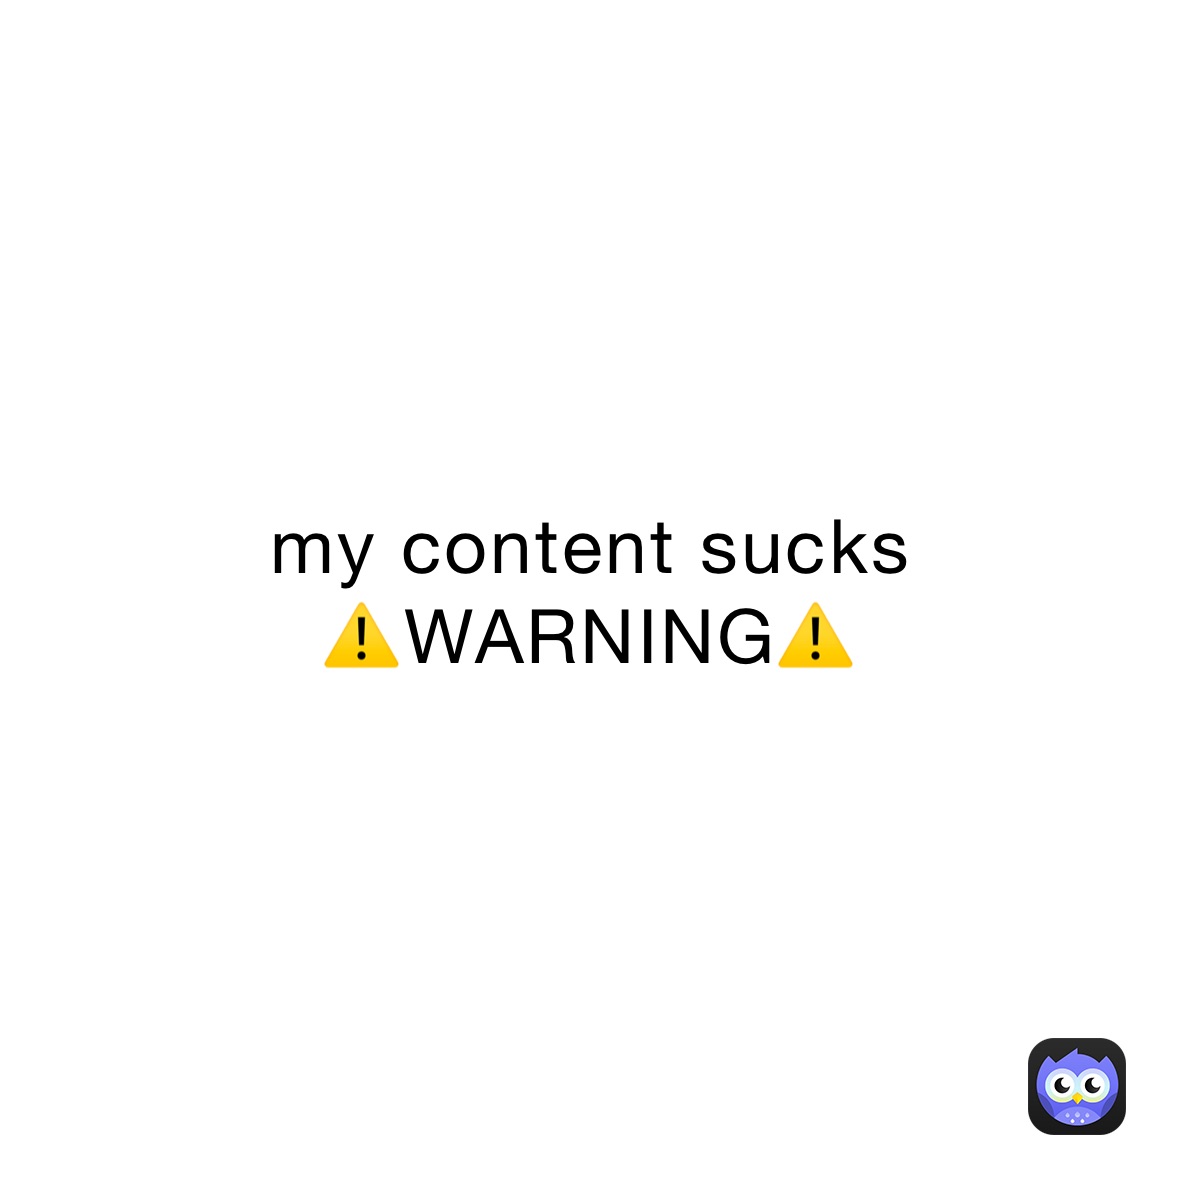 my content sucks 
⚠️WARNING⚠️